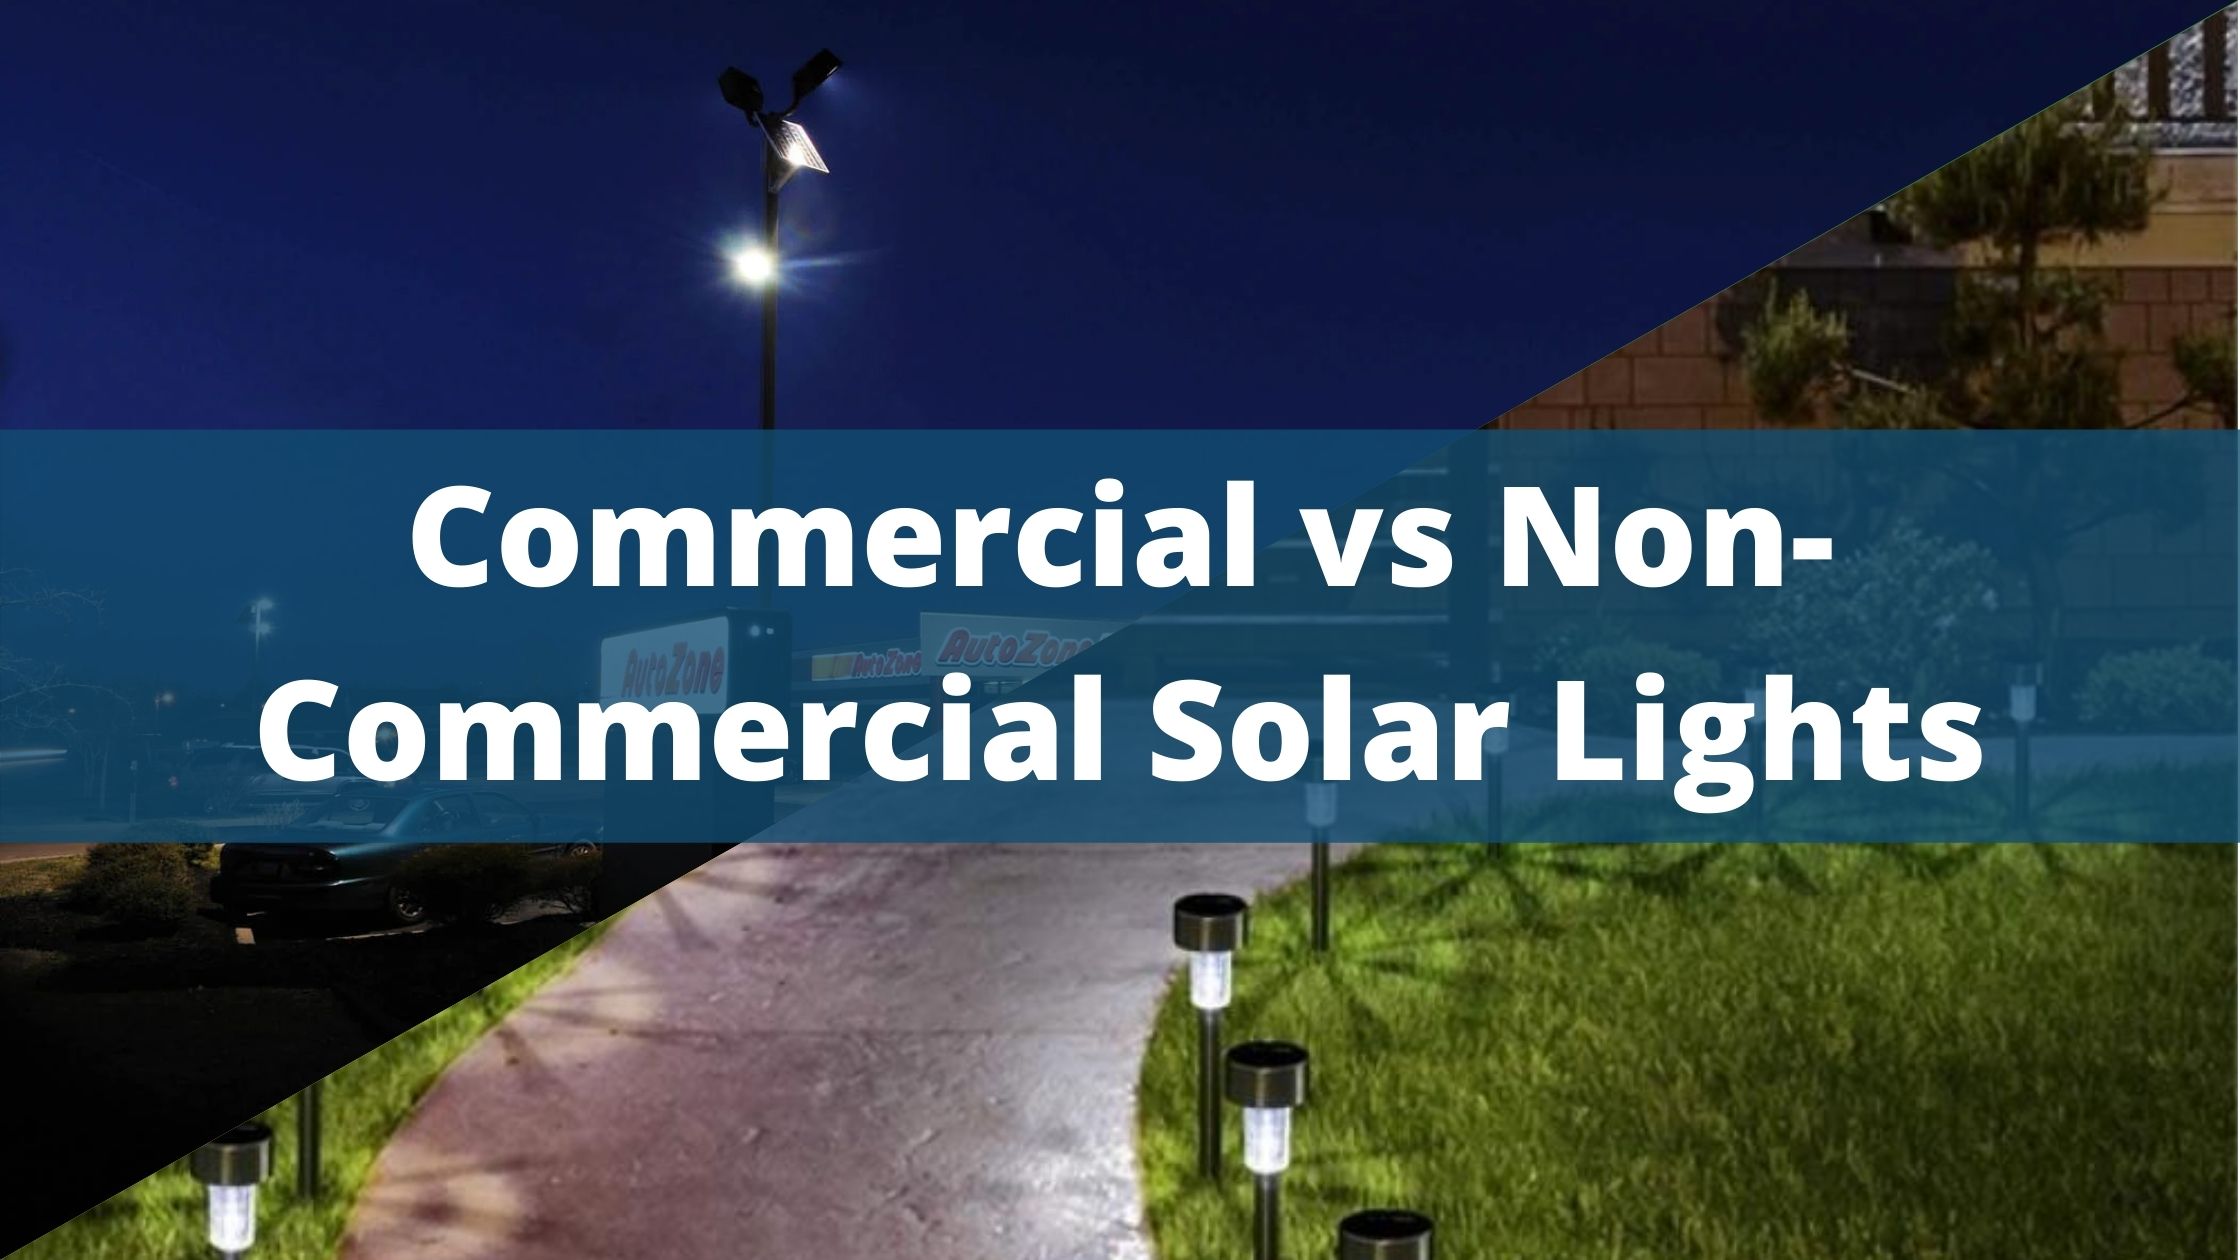 Commercial vs Non-Commercial Solar Lights